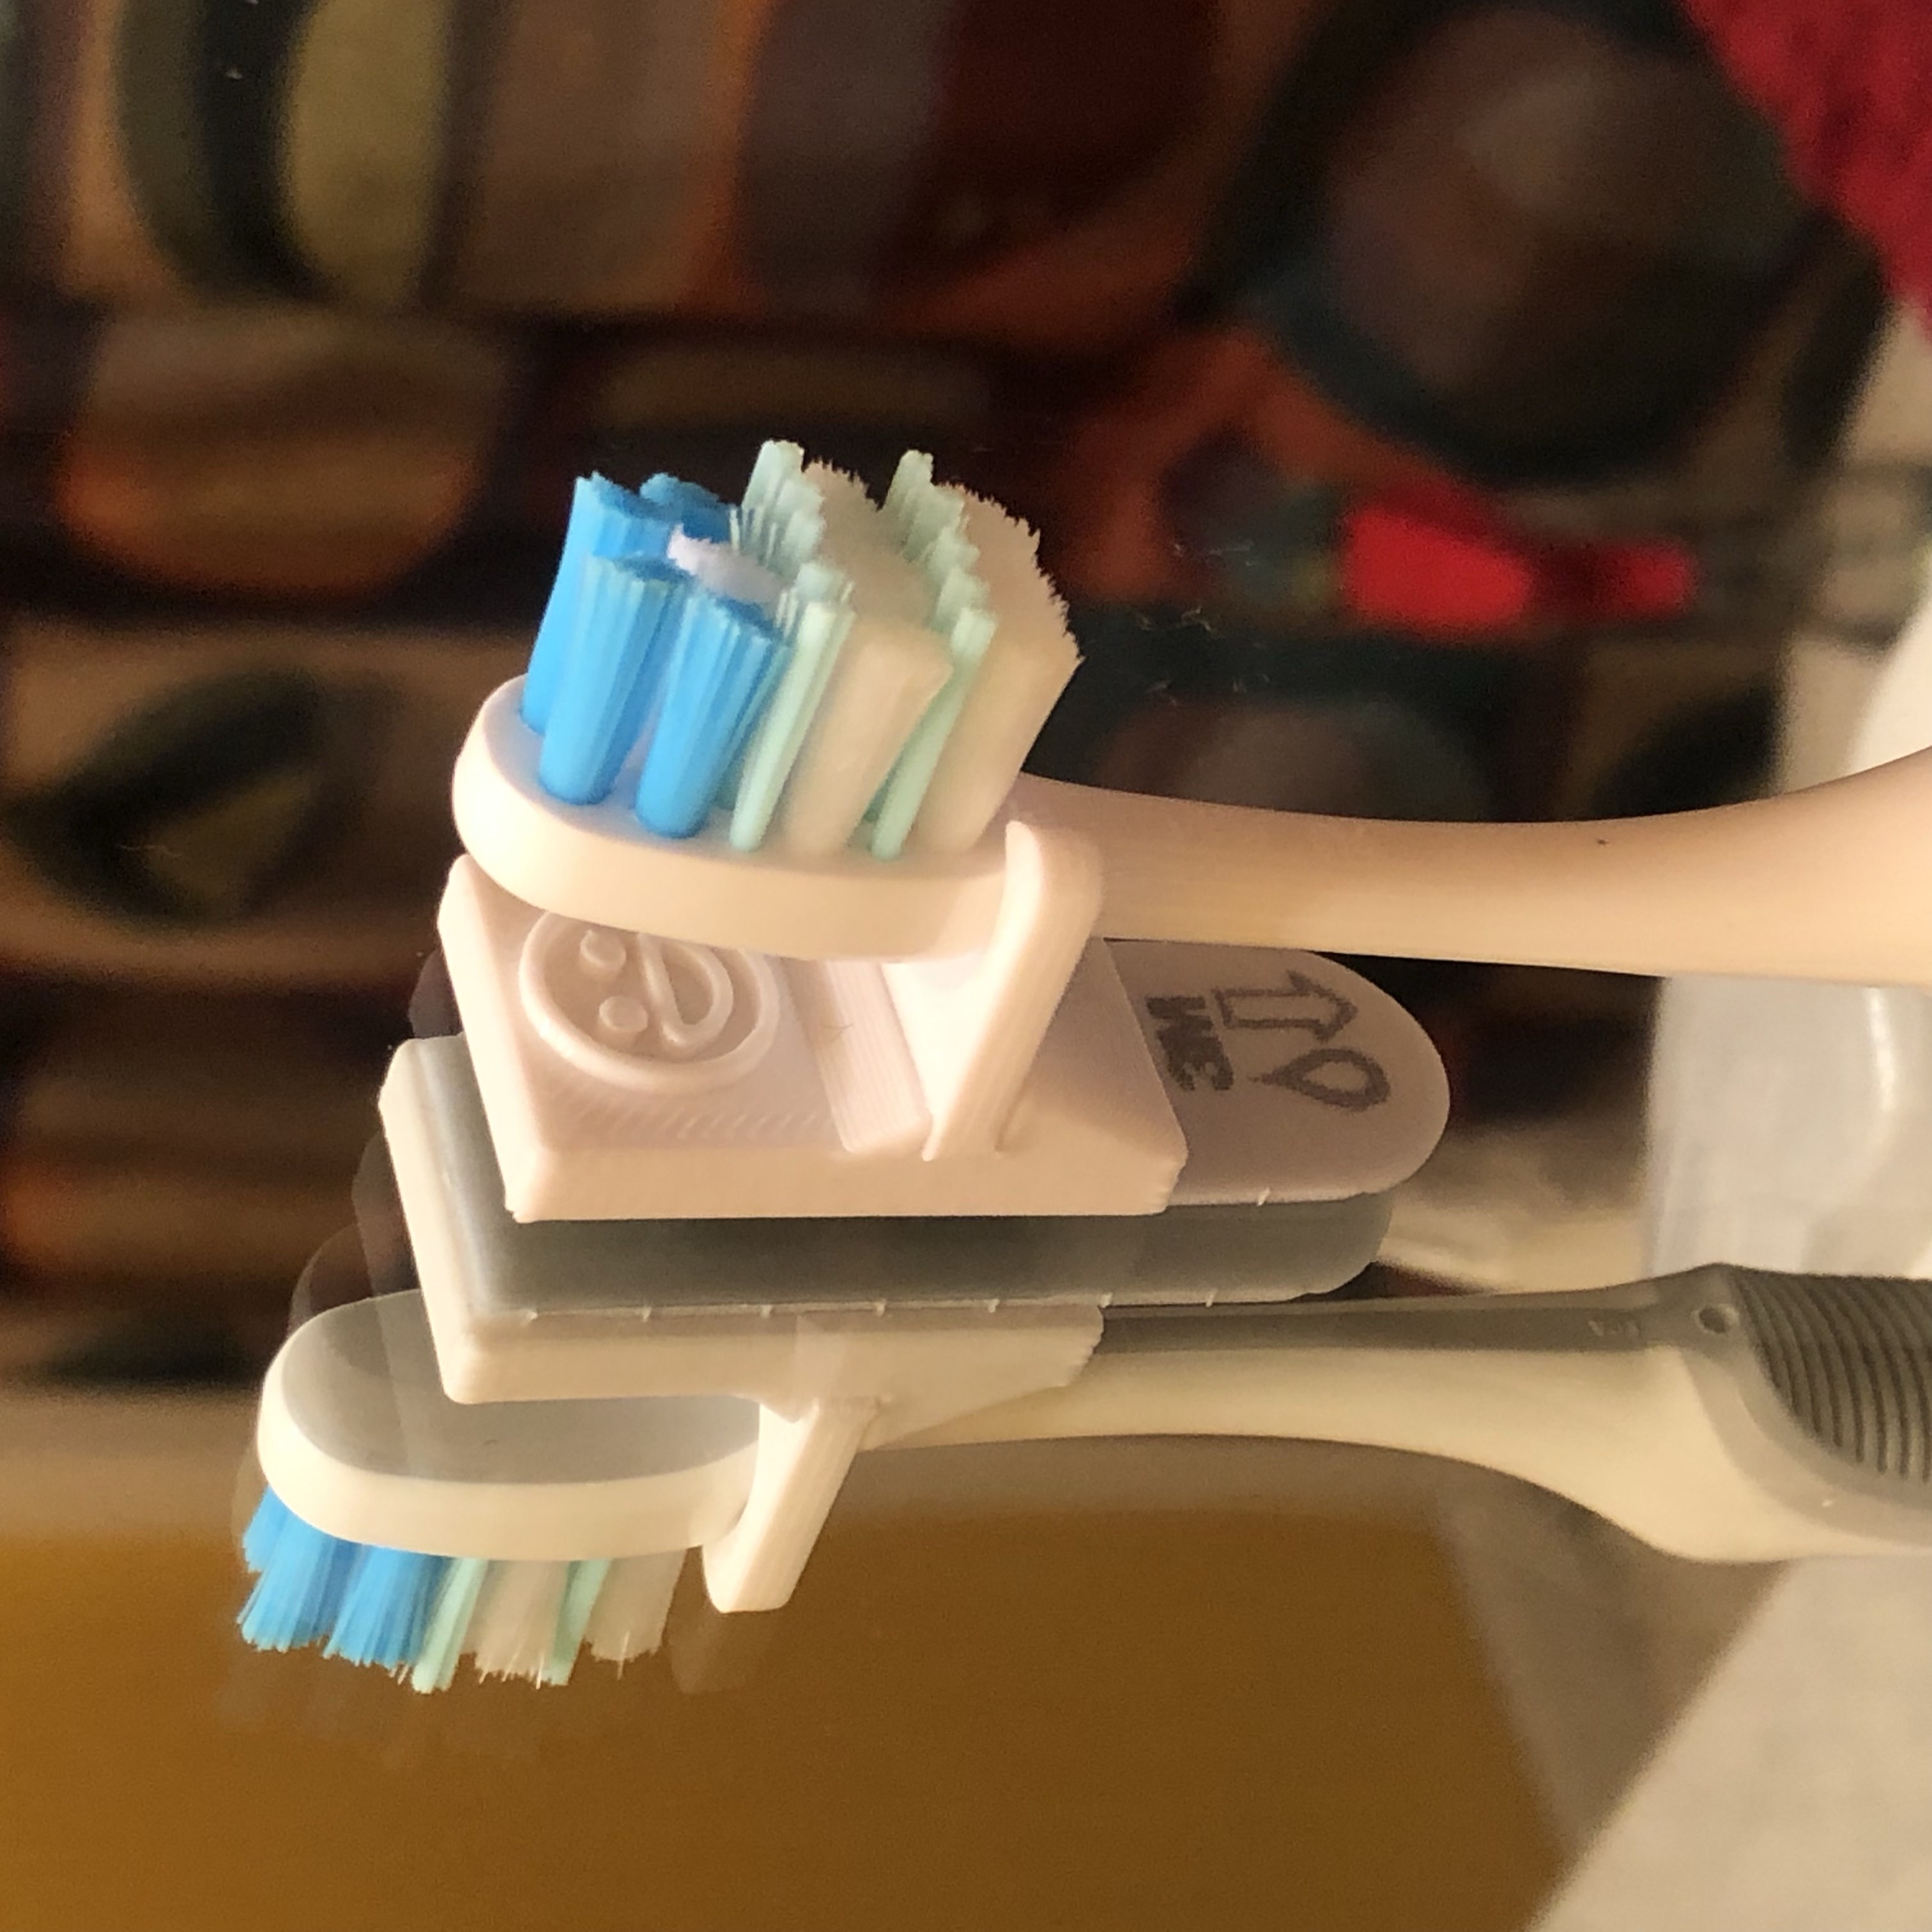 Toothbrush Holder (or Hairbrush) using 3M Command Strip